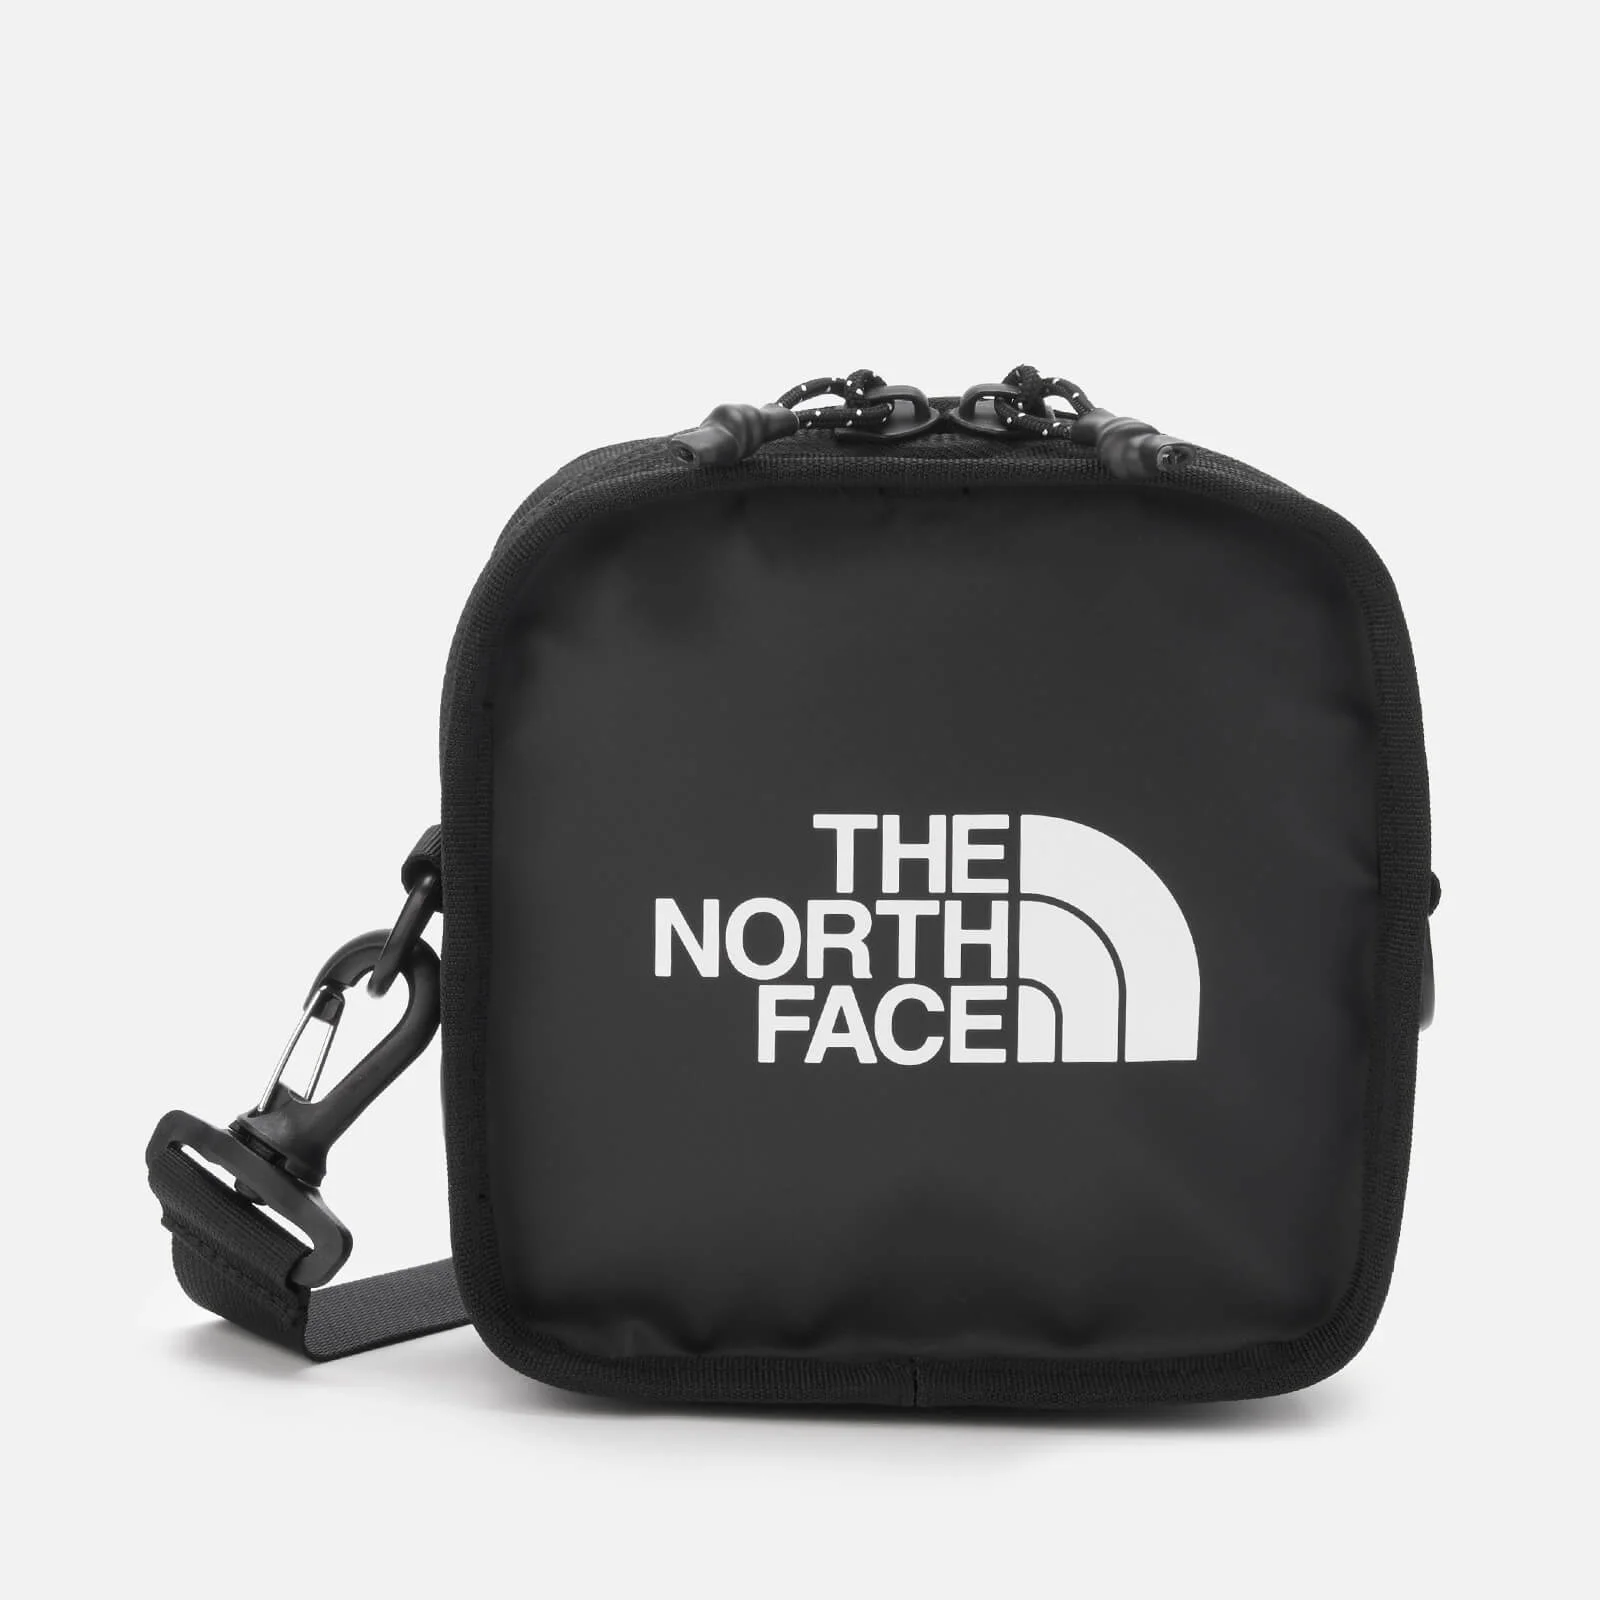 The North Face Explore Bardu 2 Bag - TNF Black Image 1